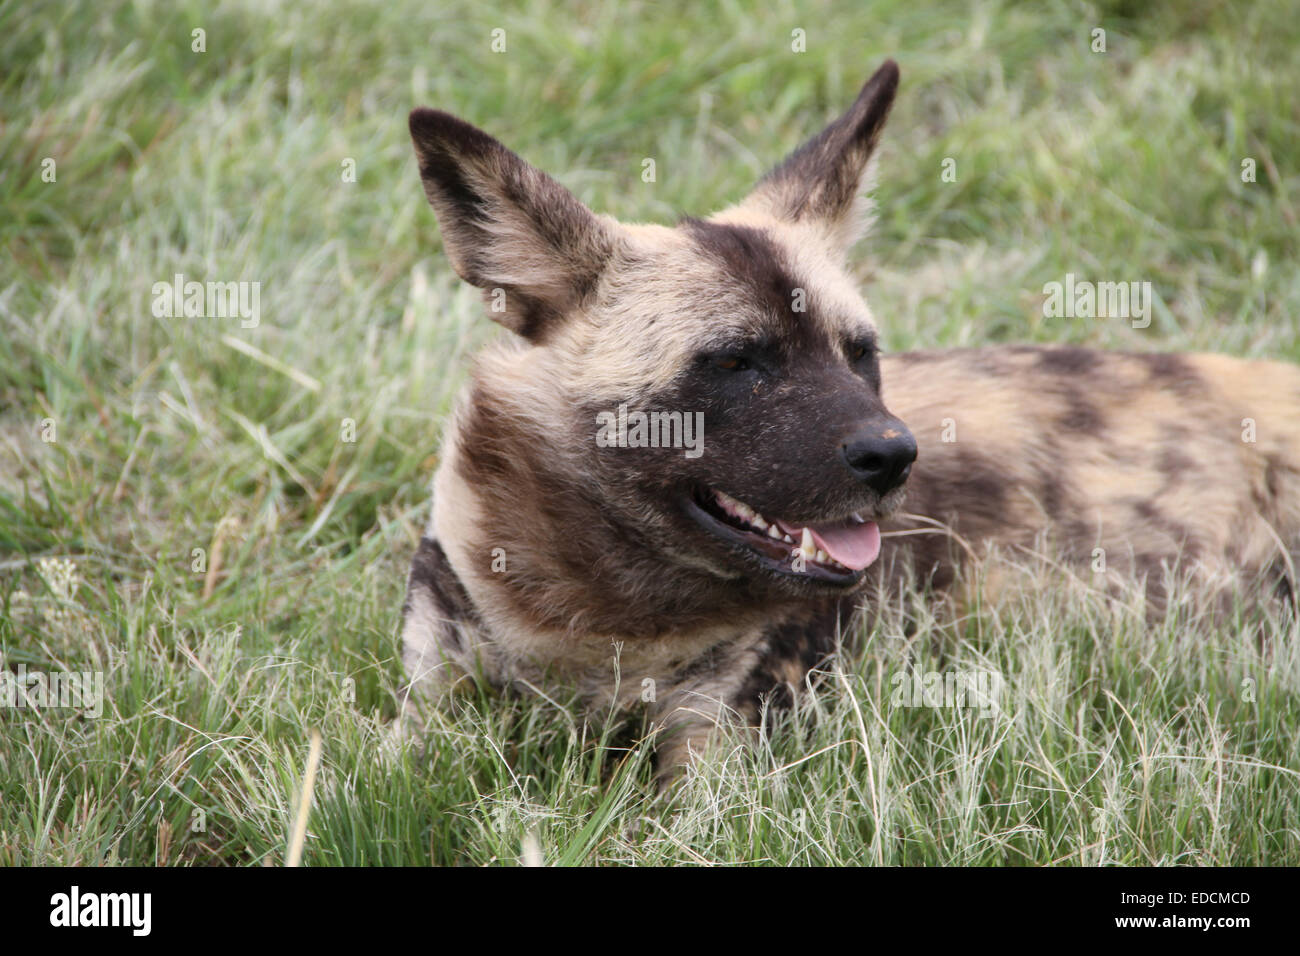 Wild Dog. Dog. African painted dog. Genus Lycaon. Endangered. Hypercarnivorous diet. African wild dog. 'wolf-like'. Stock Photo